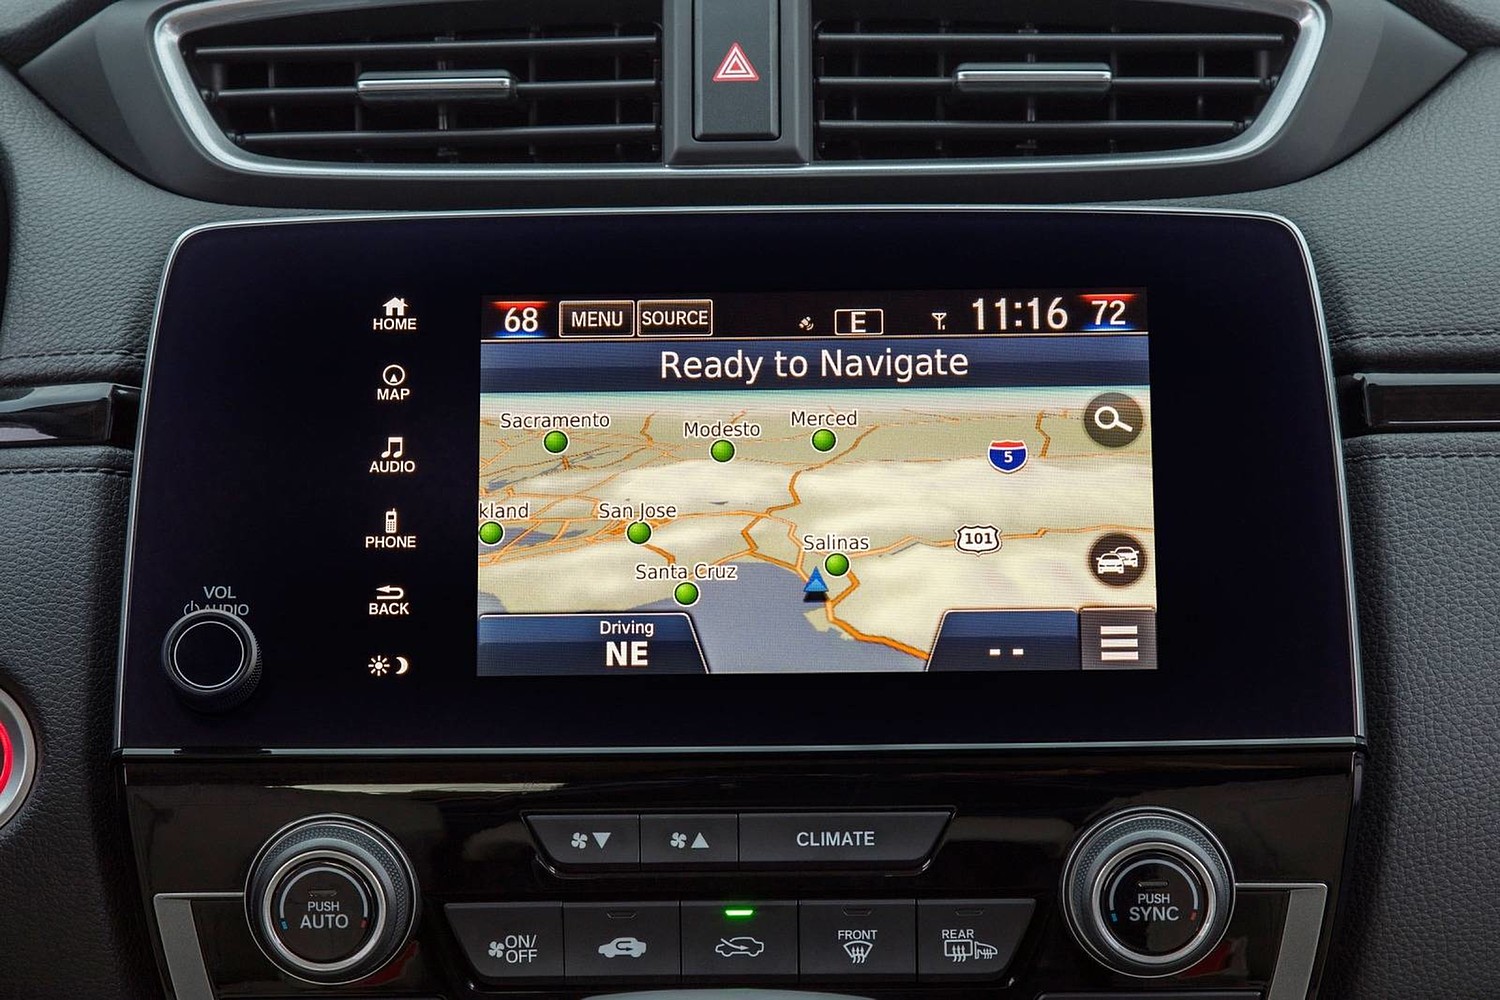 Honda CR-V Touring 4dr SUV Navigation System (2017 model year shown)